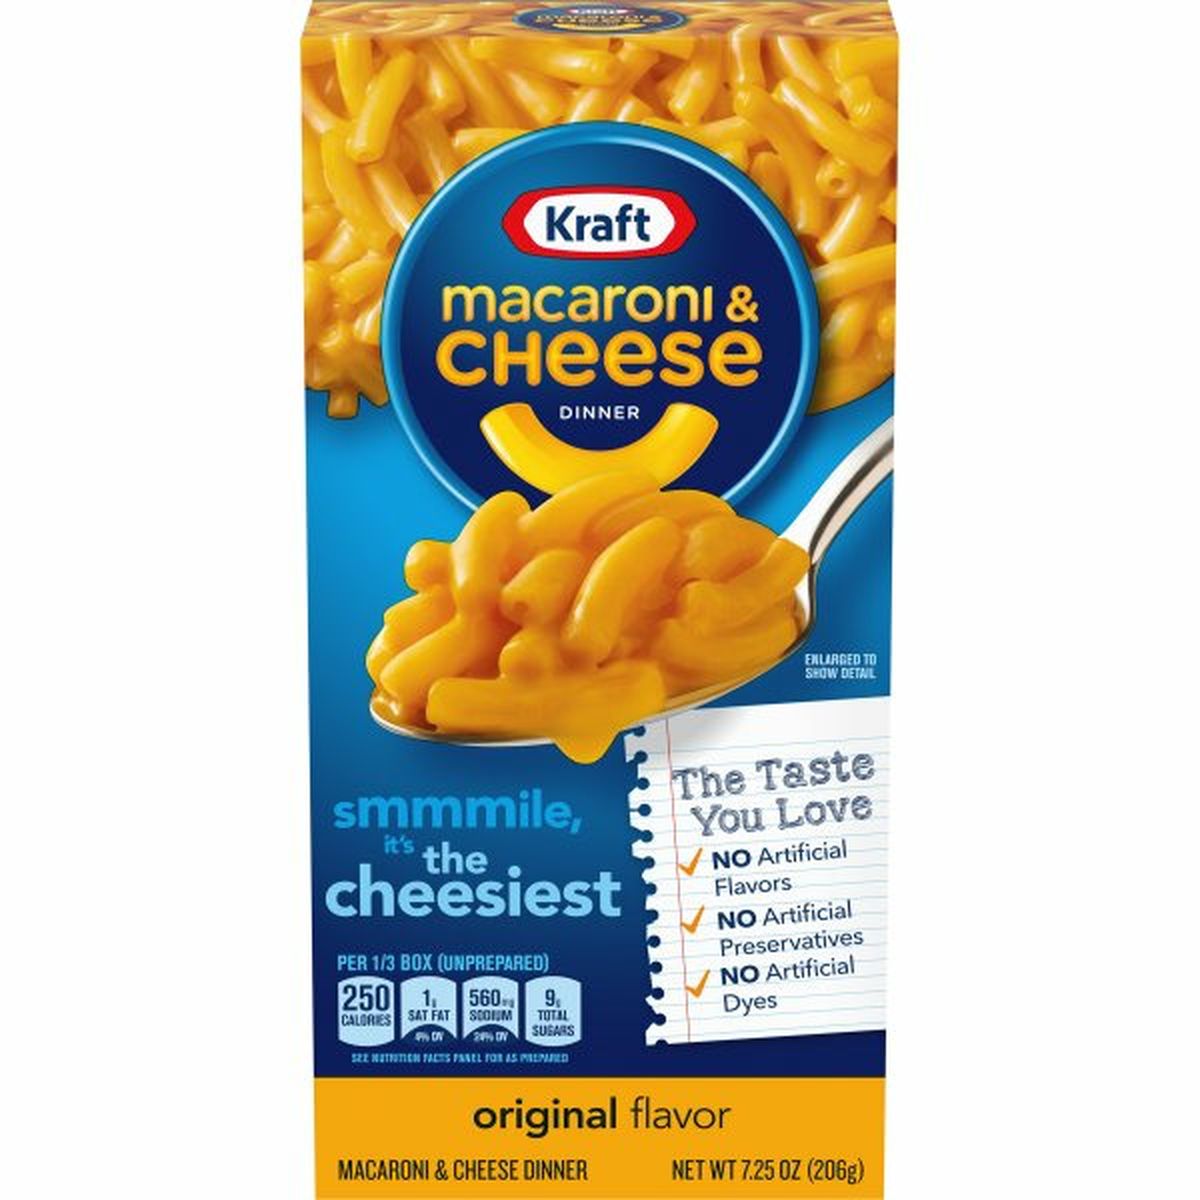 Calories in Kraft Original Flavor Macaroni & Cheese Dinner